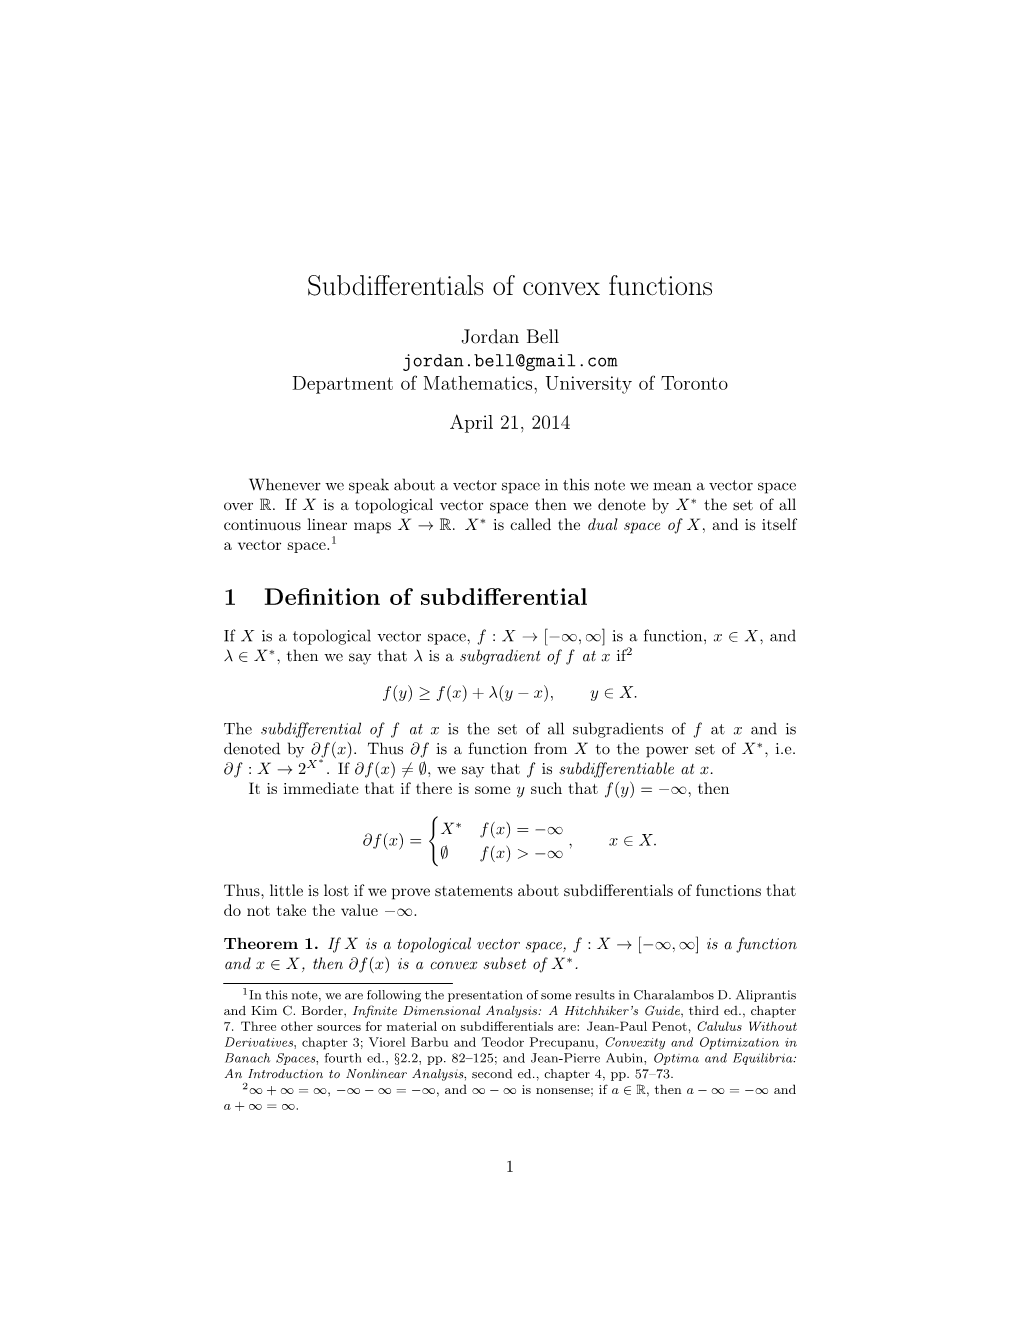 Subdifferentials of Convex Functions